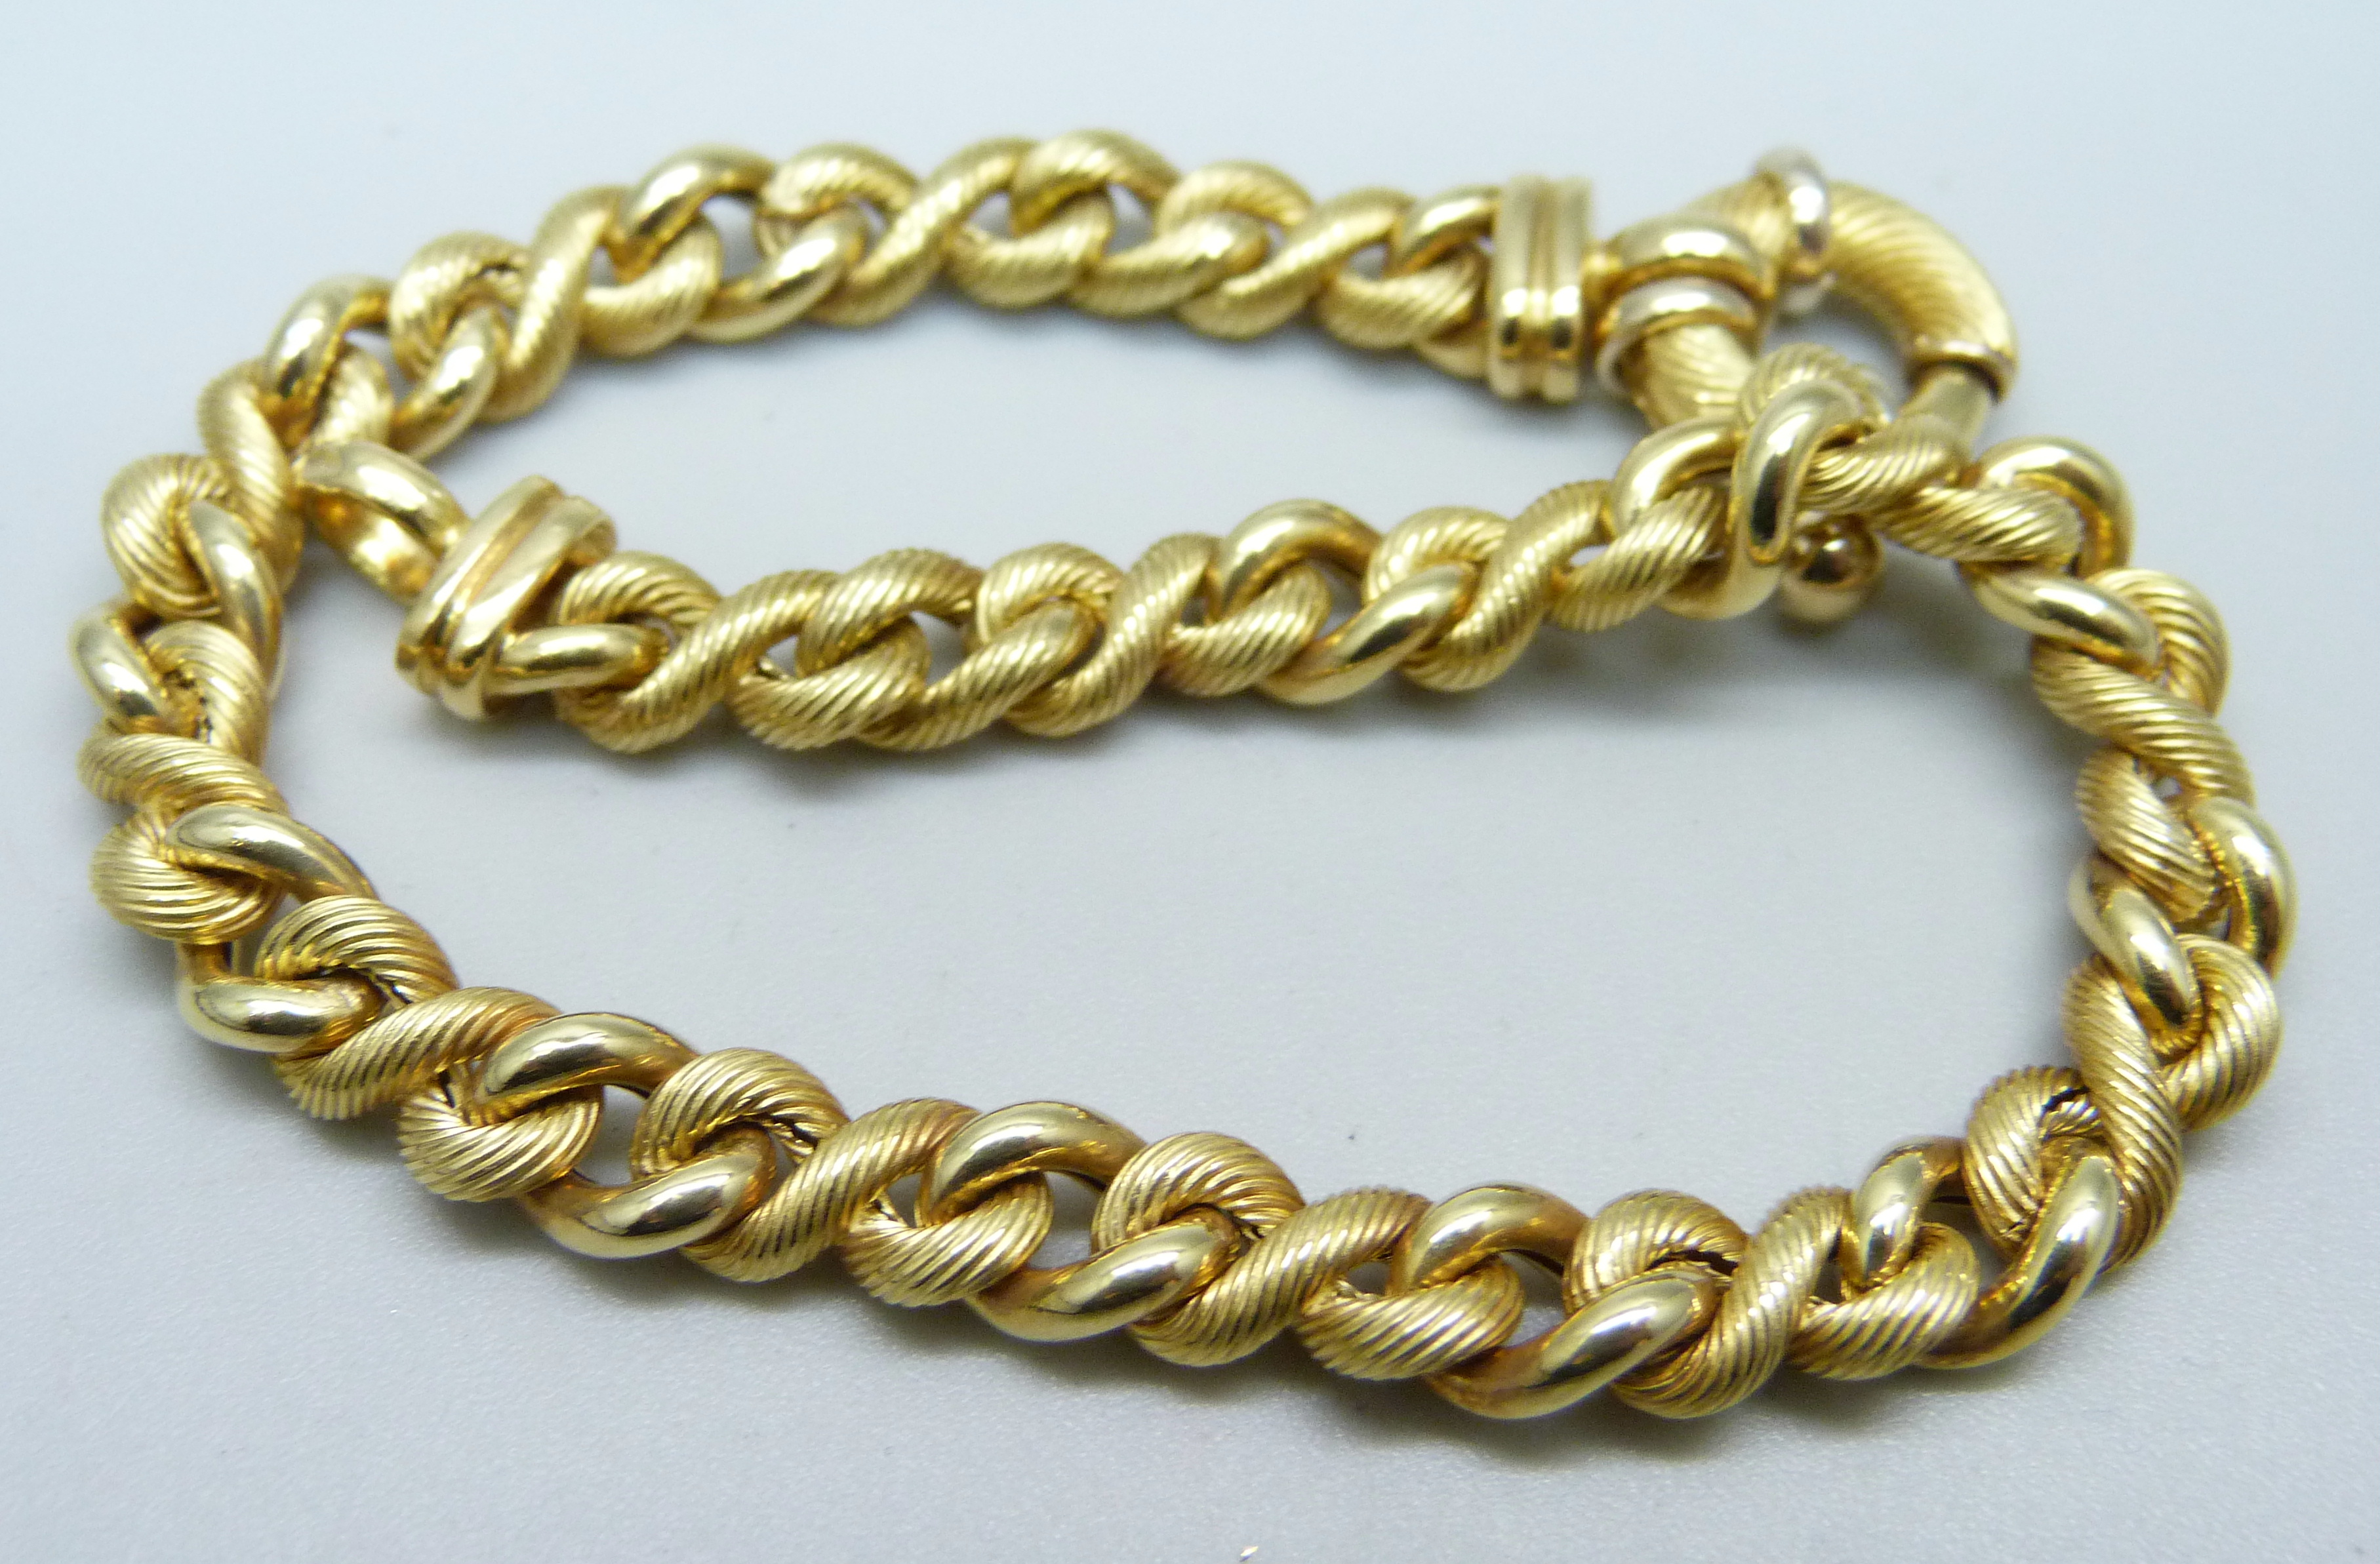 An18ct gold bracelet, 11.5g, 20.5cm - Image 2 of 3